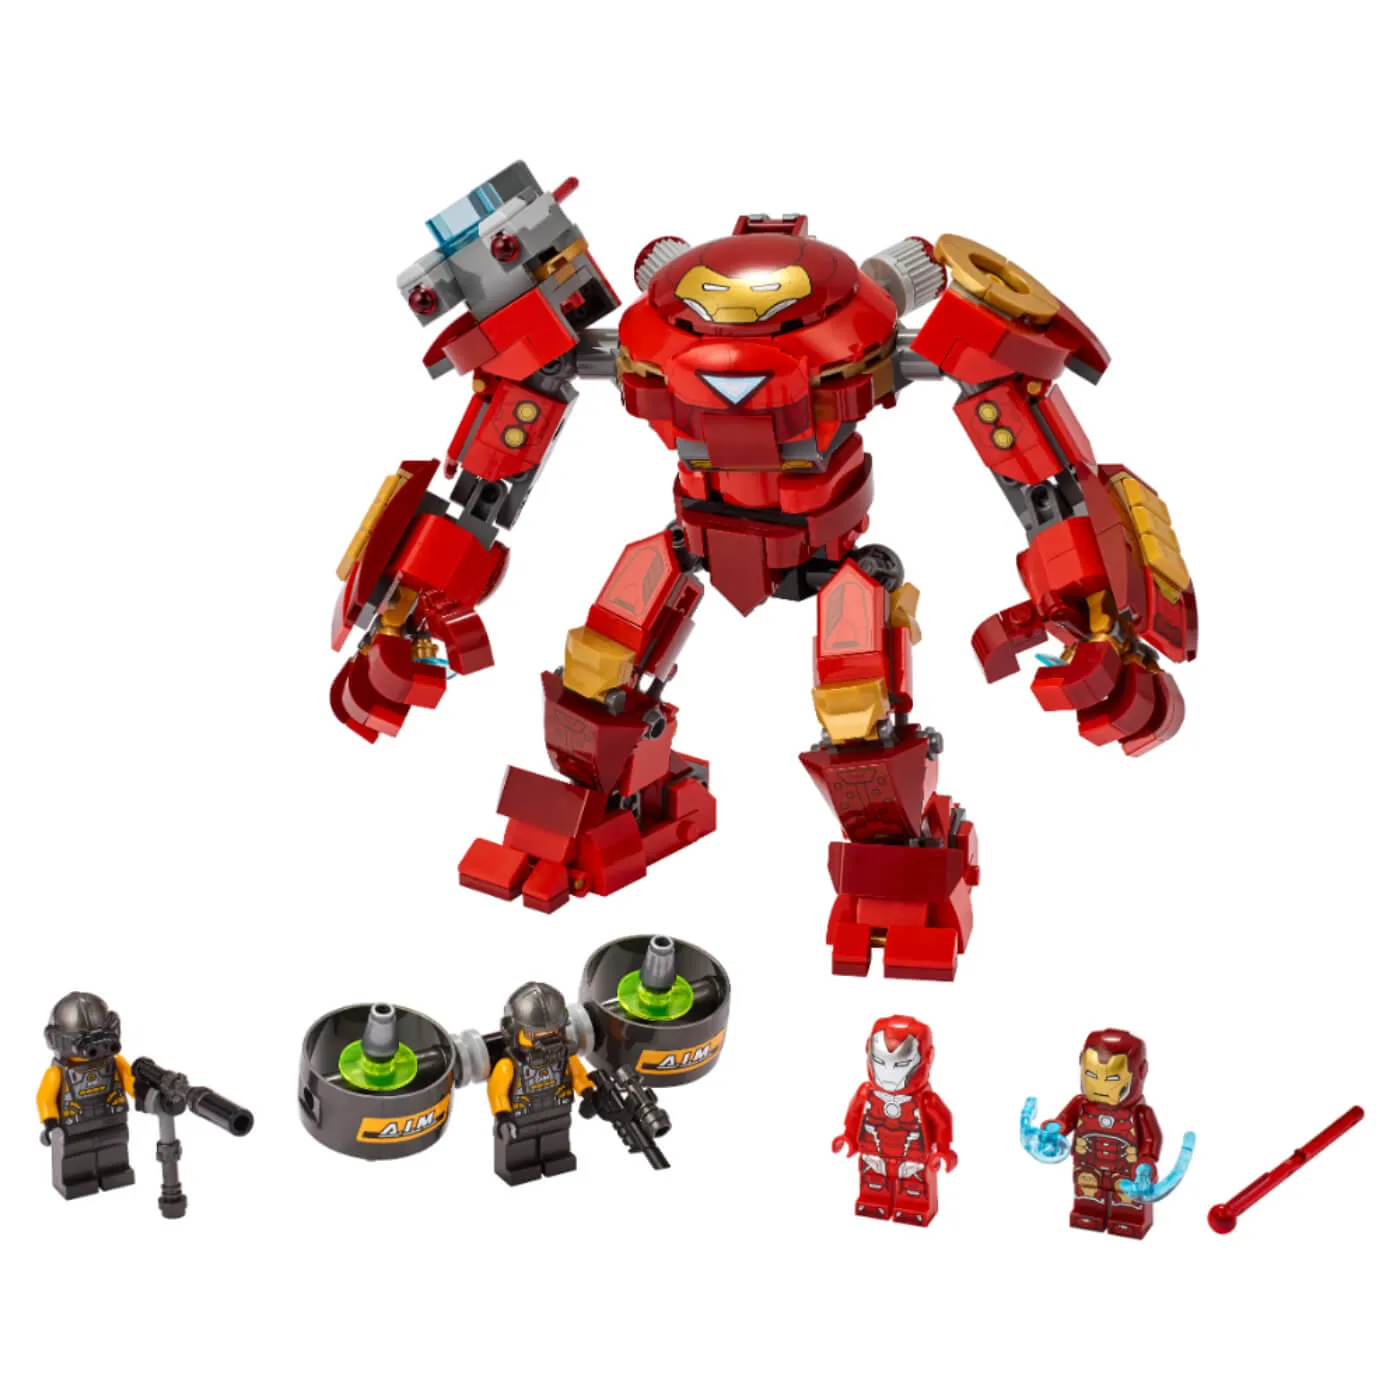 LEGO Marvel Vengadores Hulkbuster de Iron Man Vs. Agente de A.I.M.